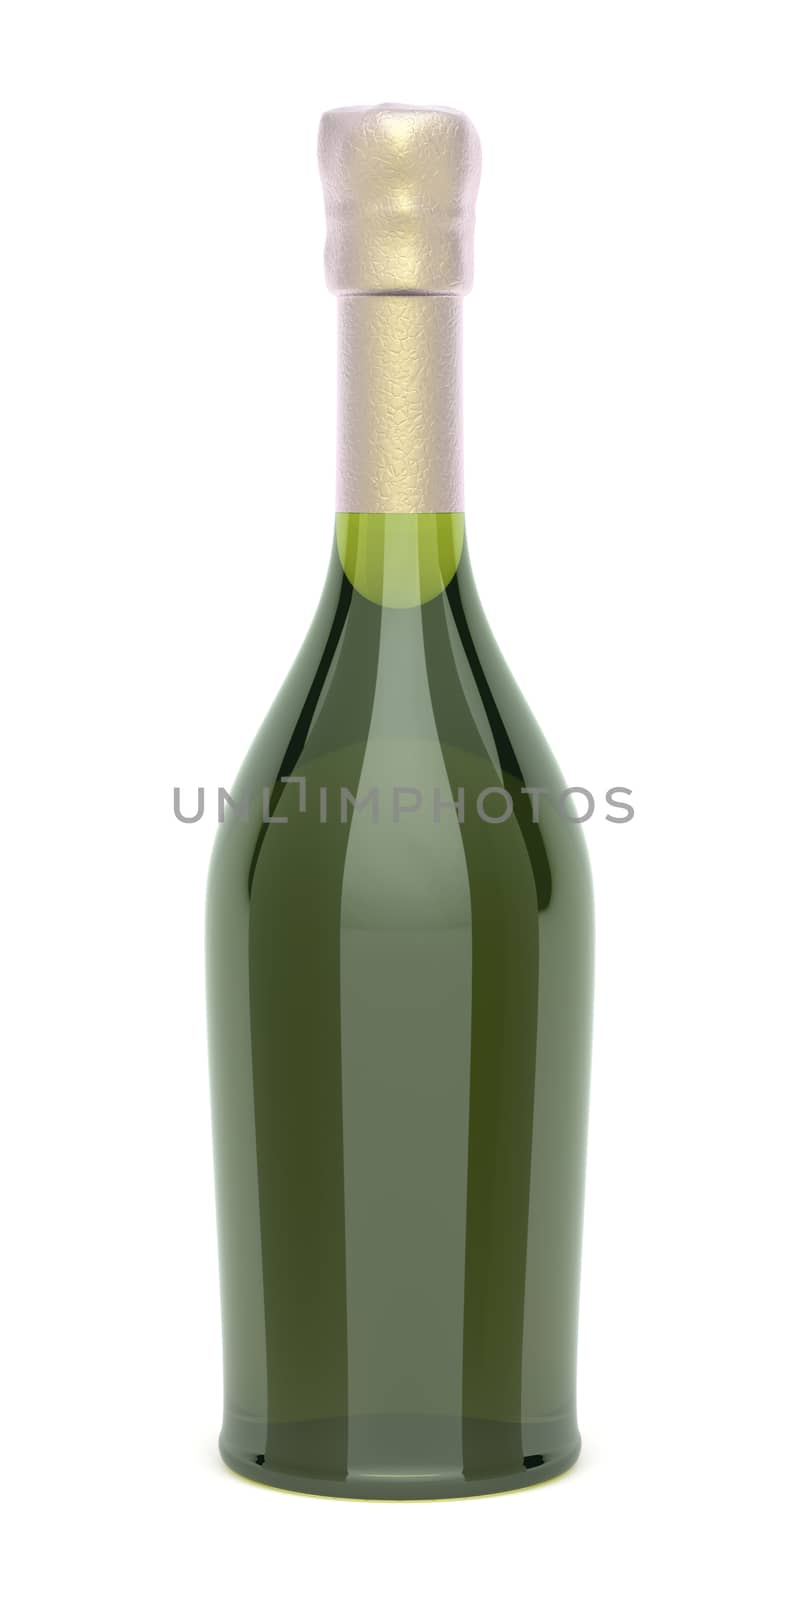 Sparkling wine bottle on white background 